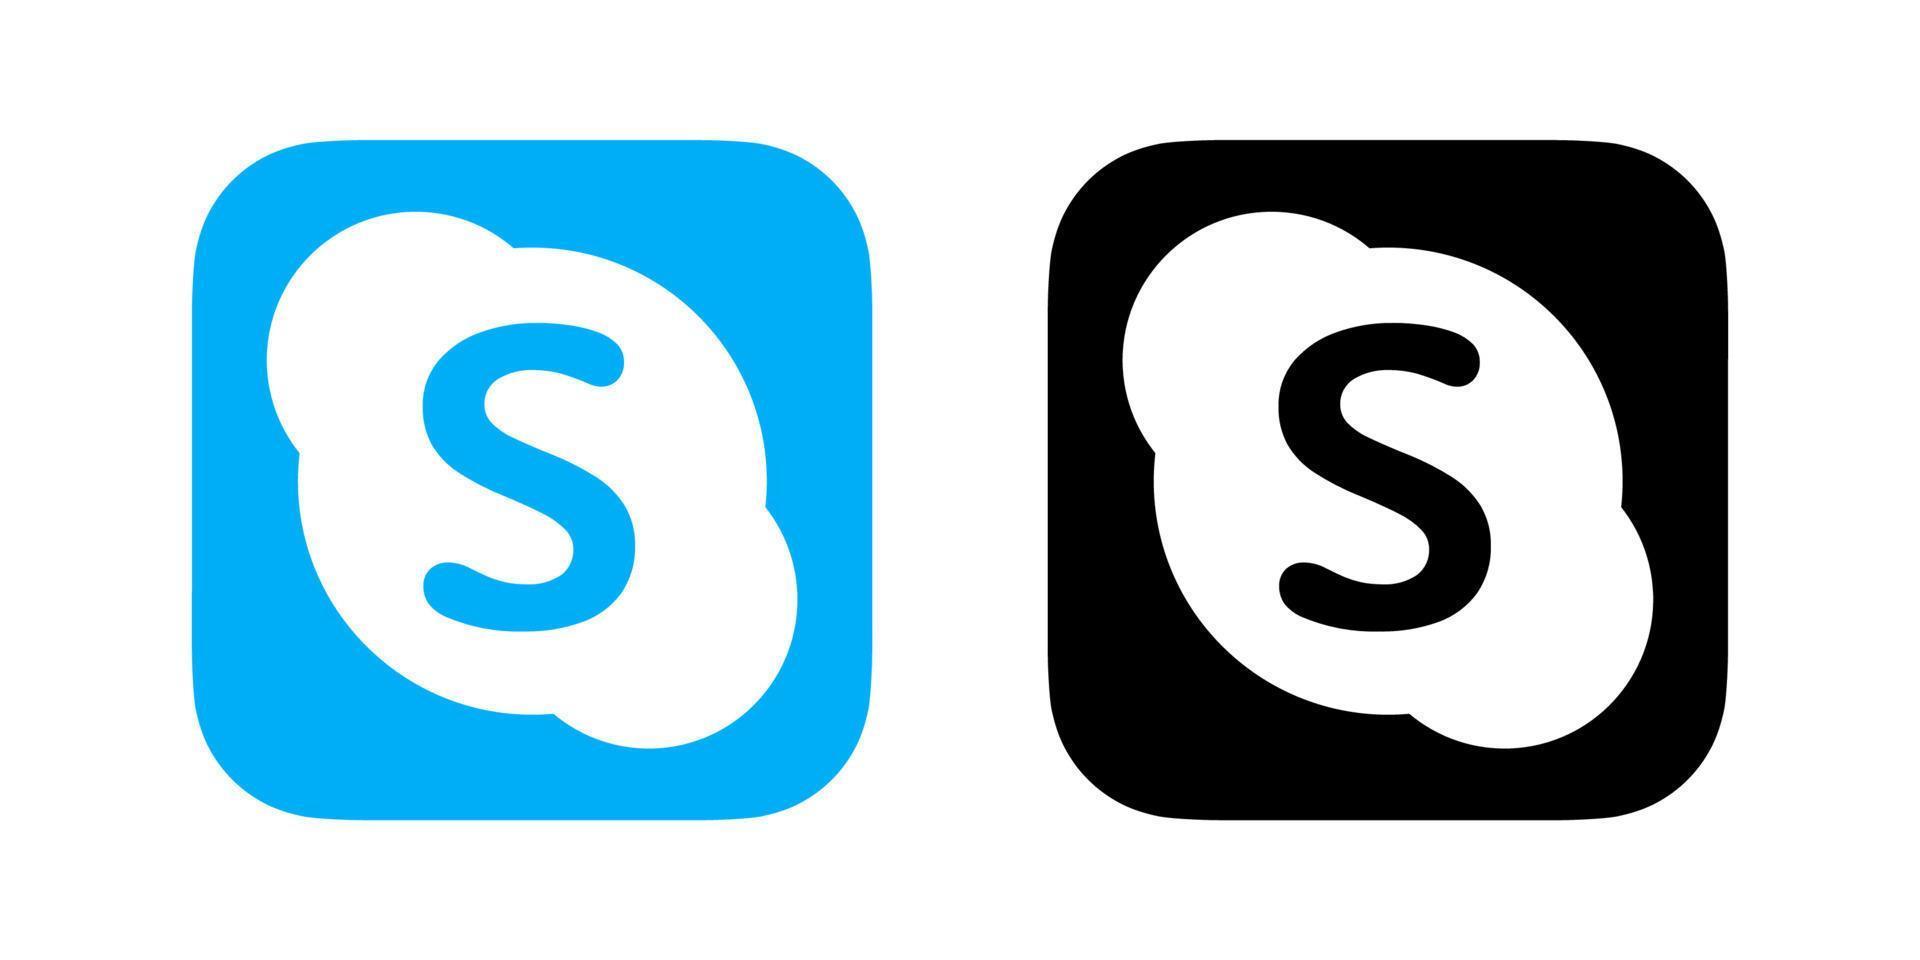 skype logo vettore, skype icona gratuito vettore